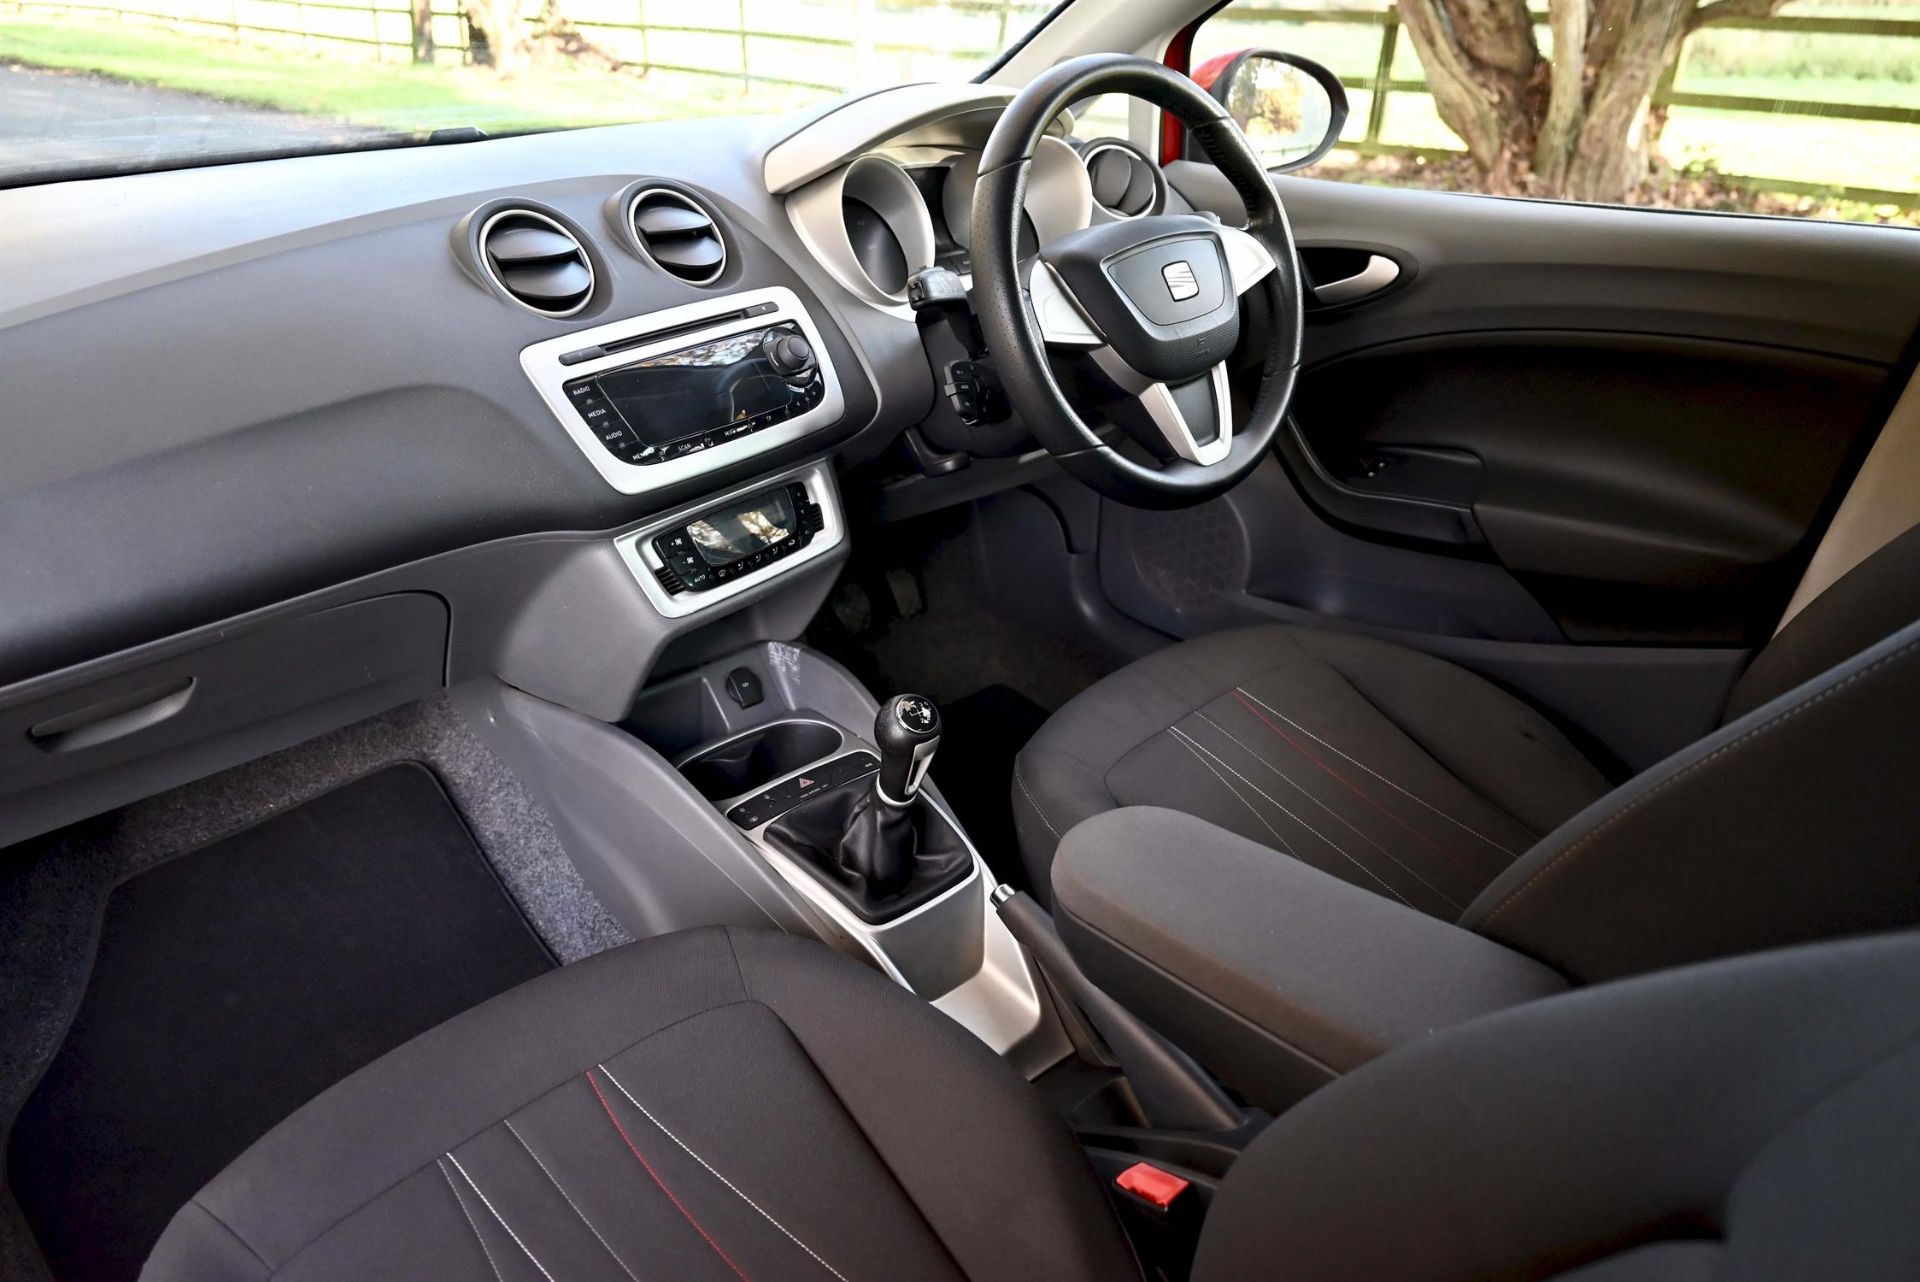 2012 SEAT Ibiza 1.4 SE 'COPA' Estate. Registration number AO61 XKX. Petrol, 5-Speed Manual. - Image 9 of 16